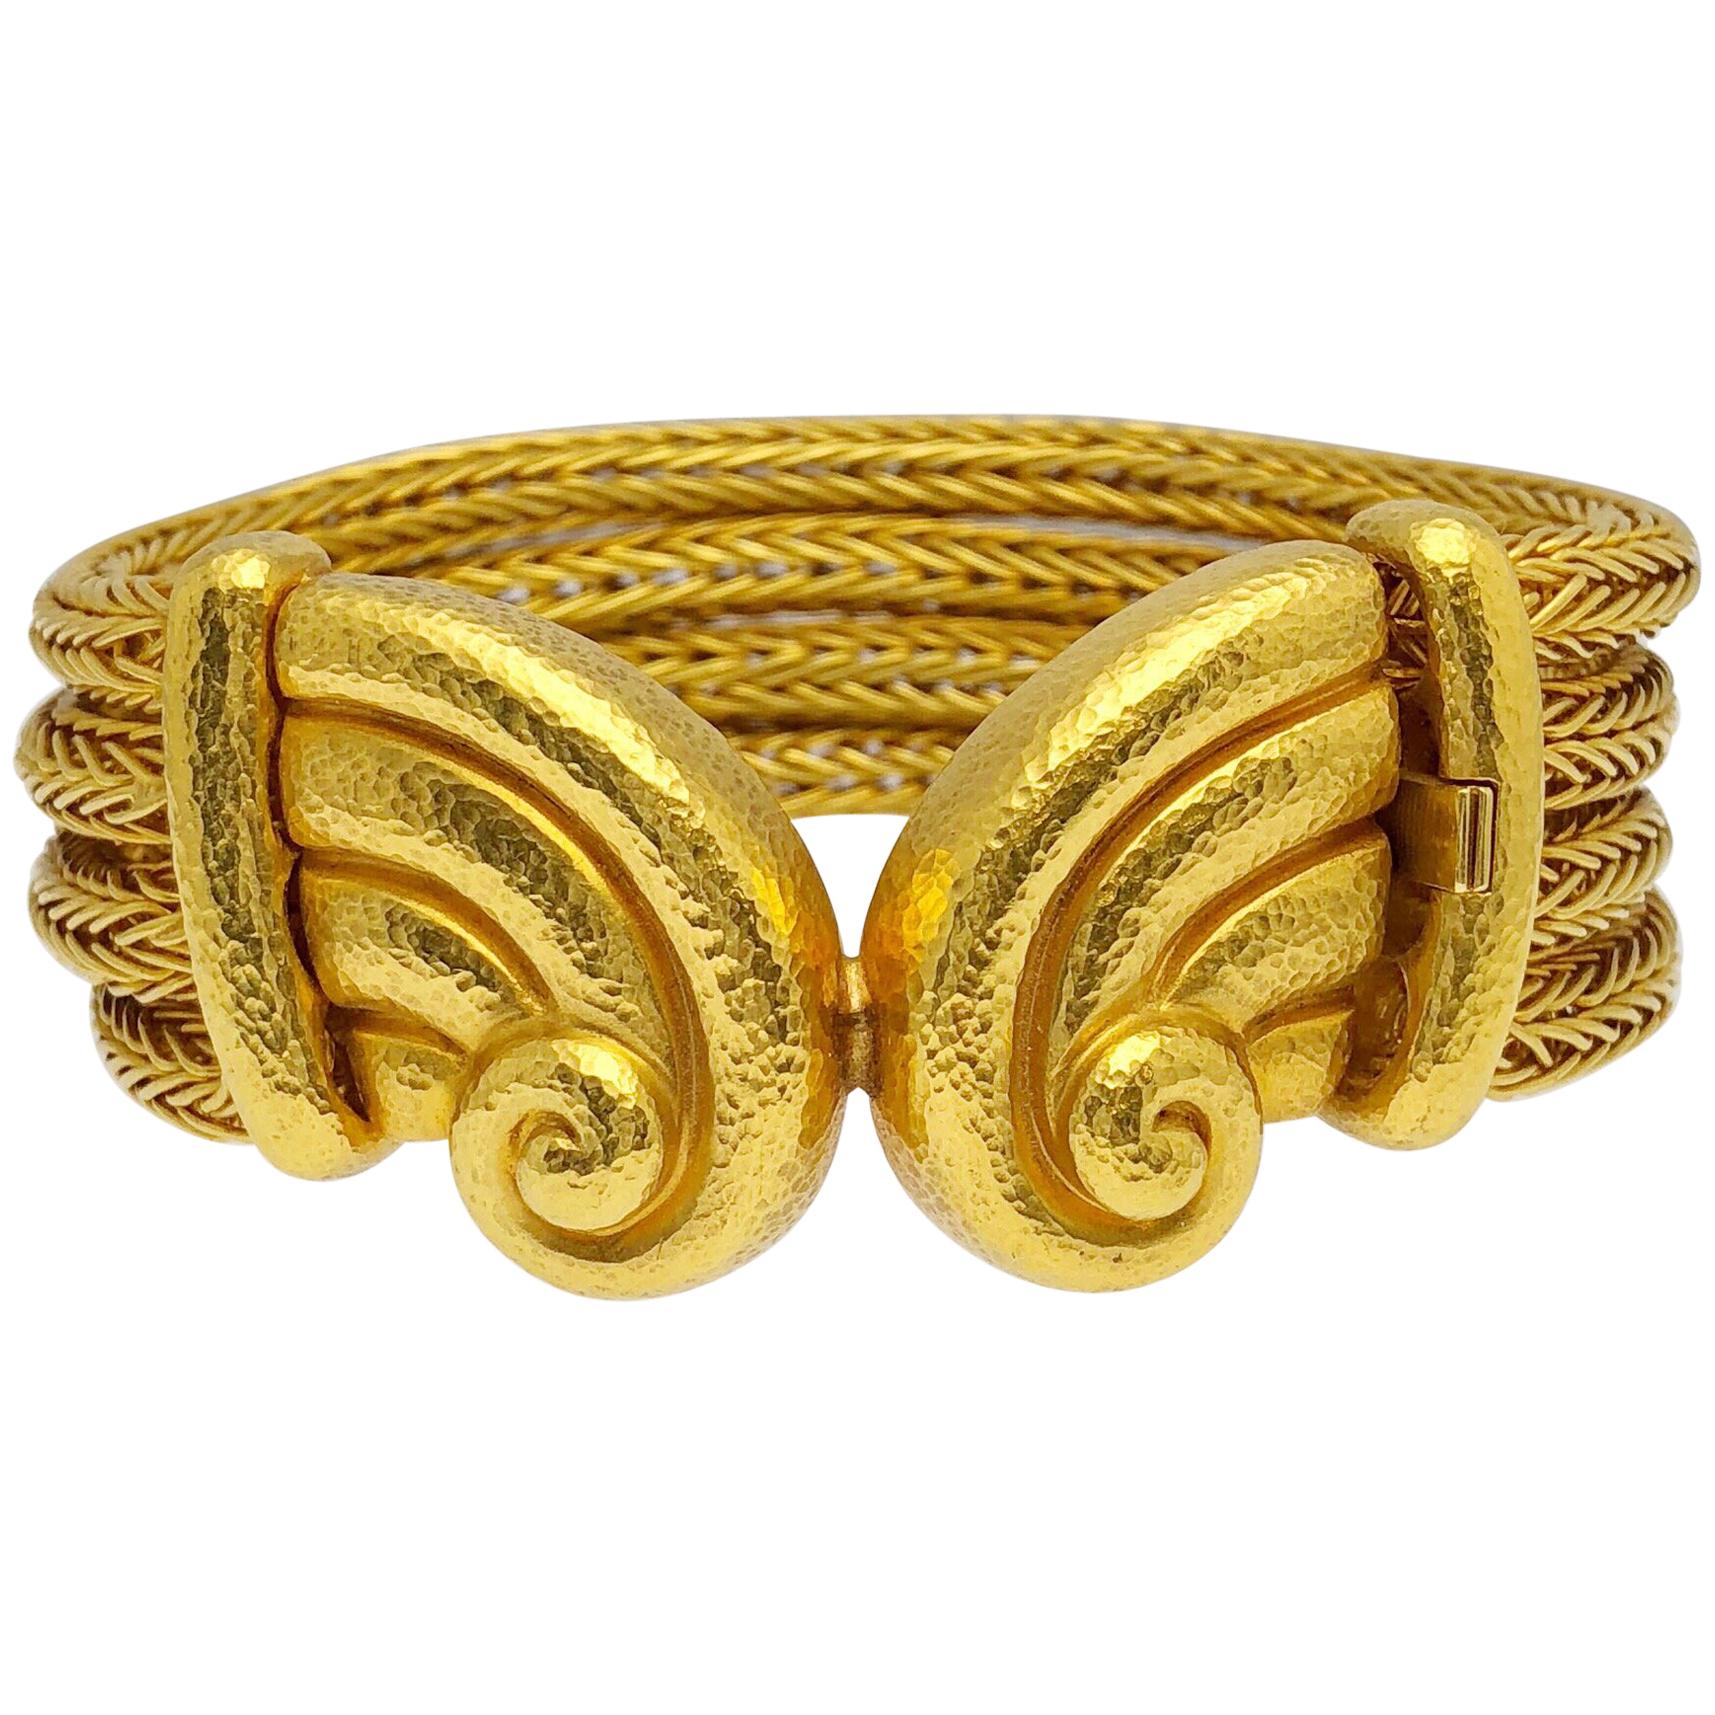 Zolotas 24 Karat and 22 Karat Yellow Gold Rope Bracelet with Greek Motif Centre